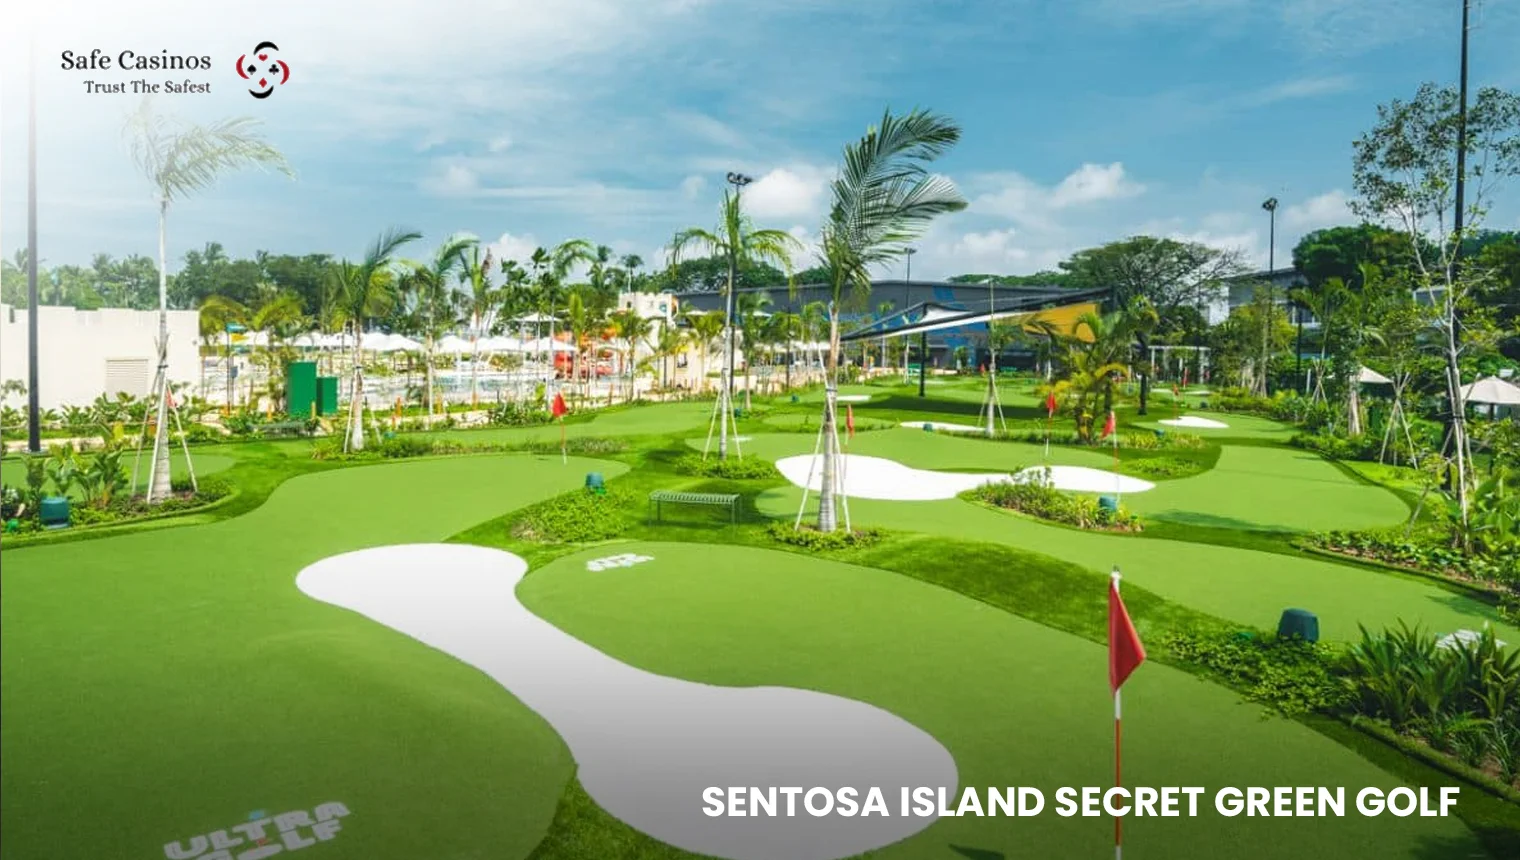 Sentosa Island Secret Green golf